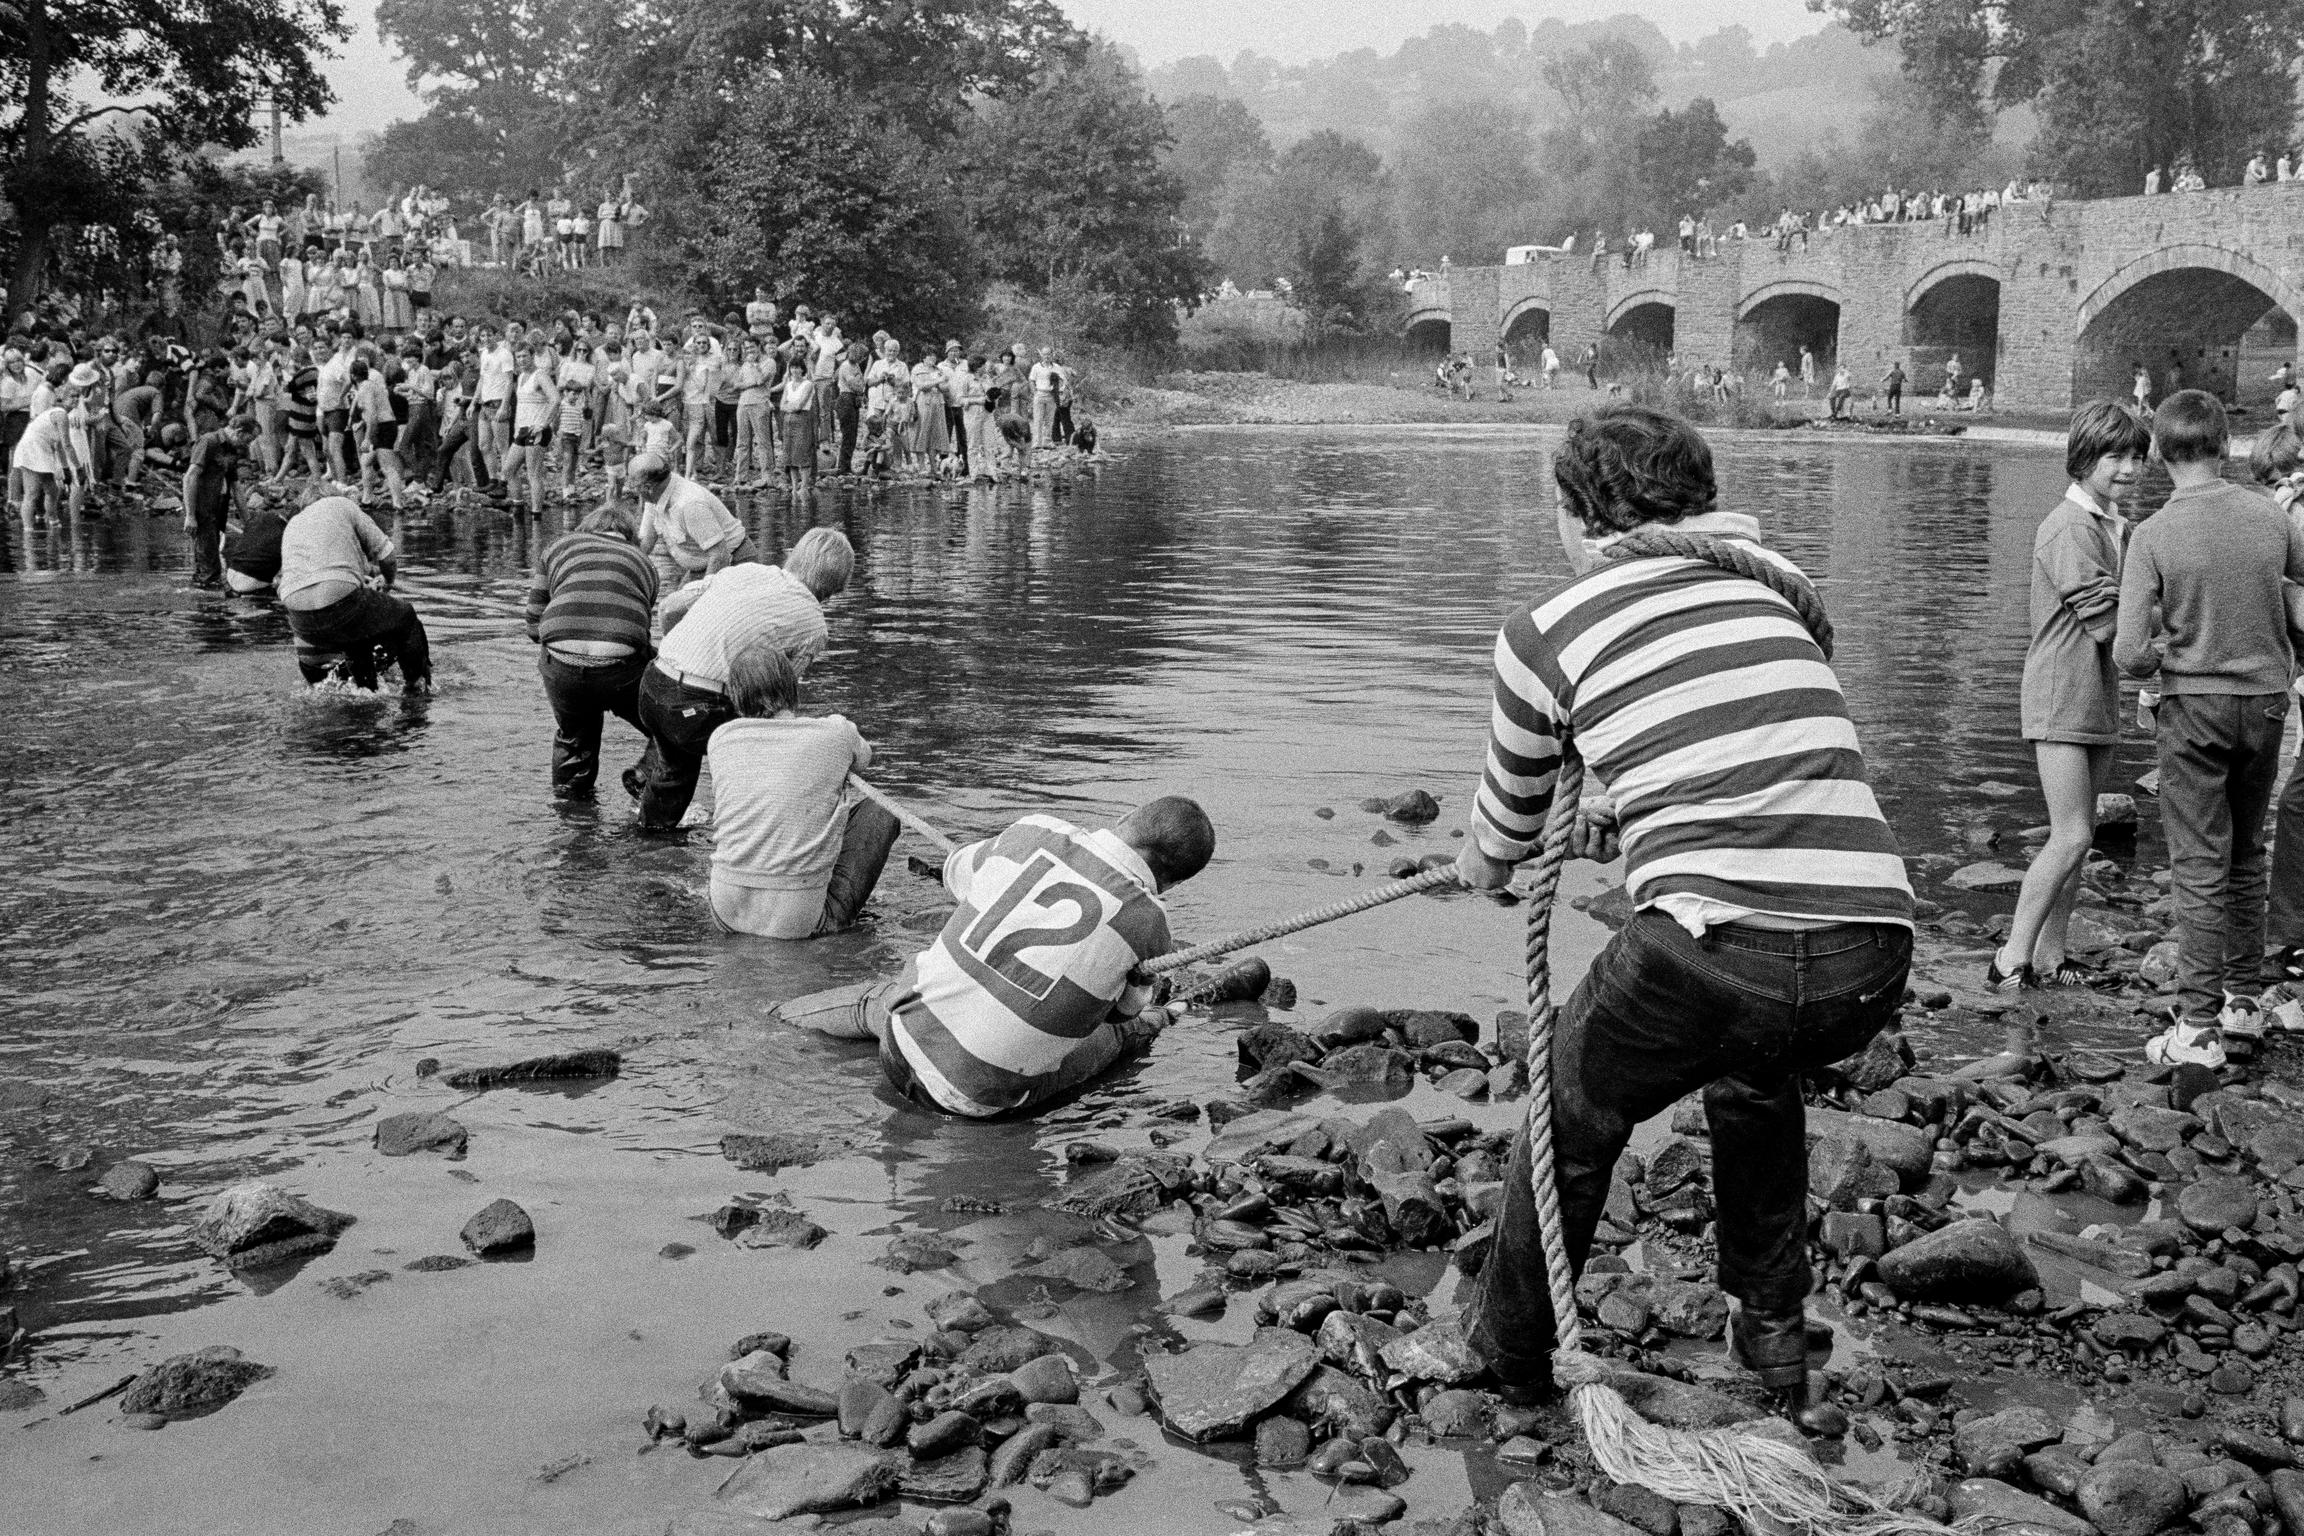 Tradition, tug-o-war across the river. Crickhowel, Wales